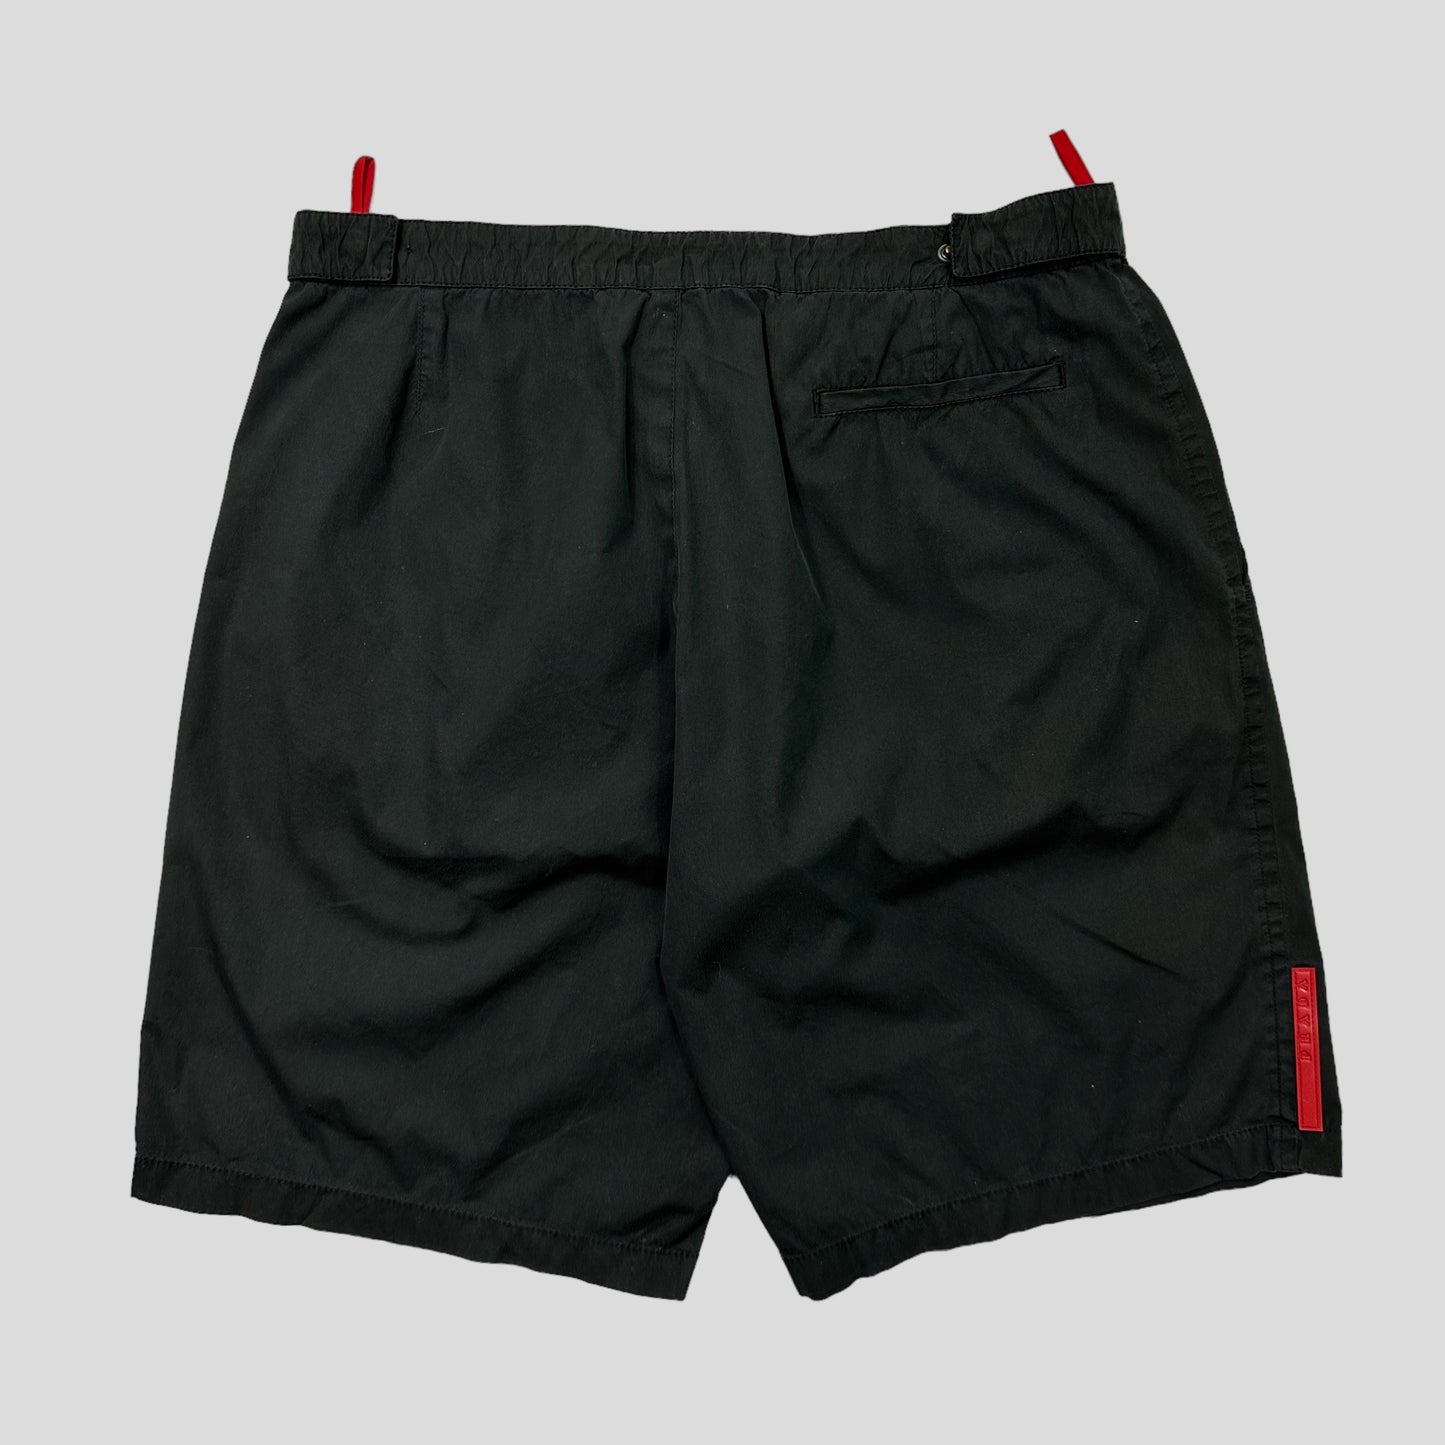 Prada Sport 00’s Co-nylon Shorts - IT48